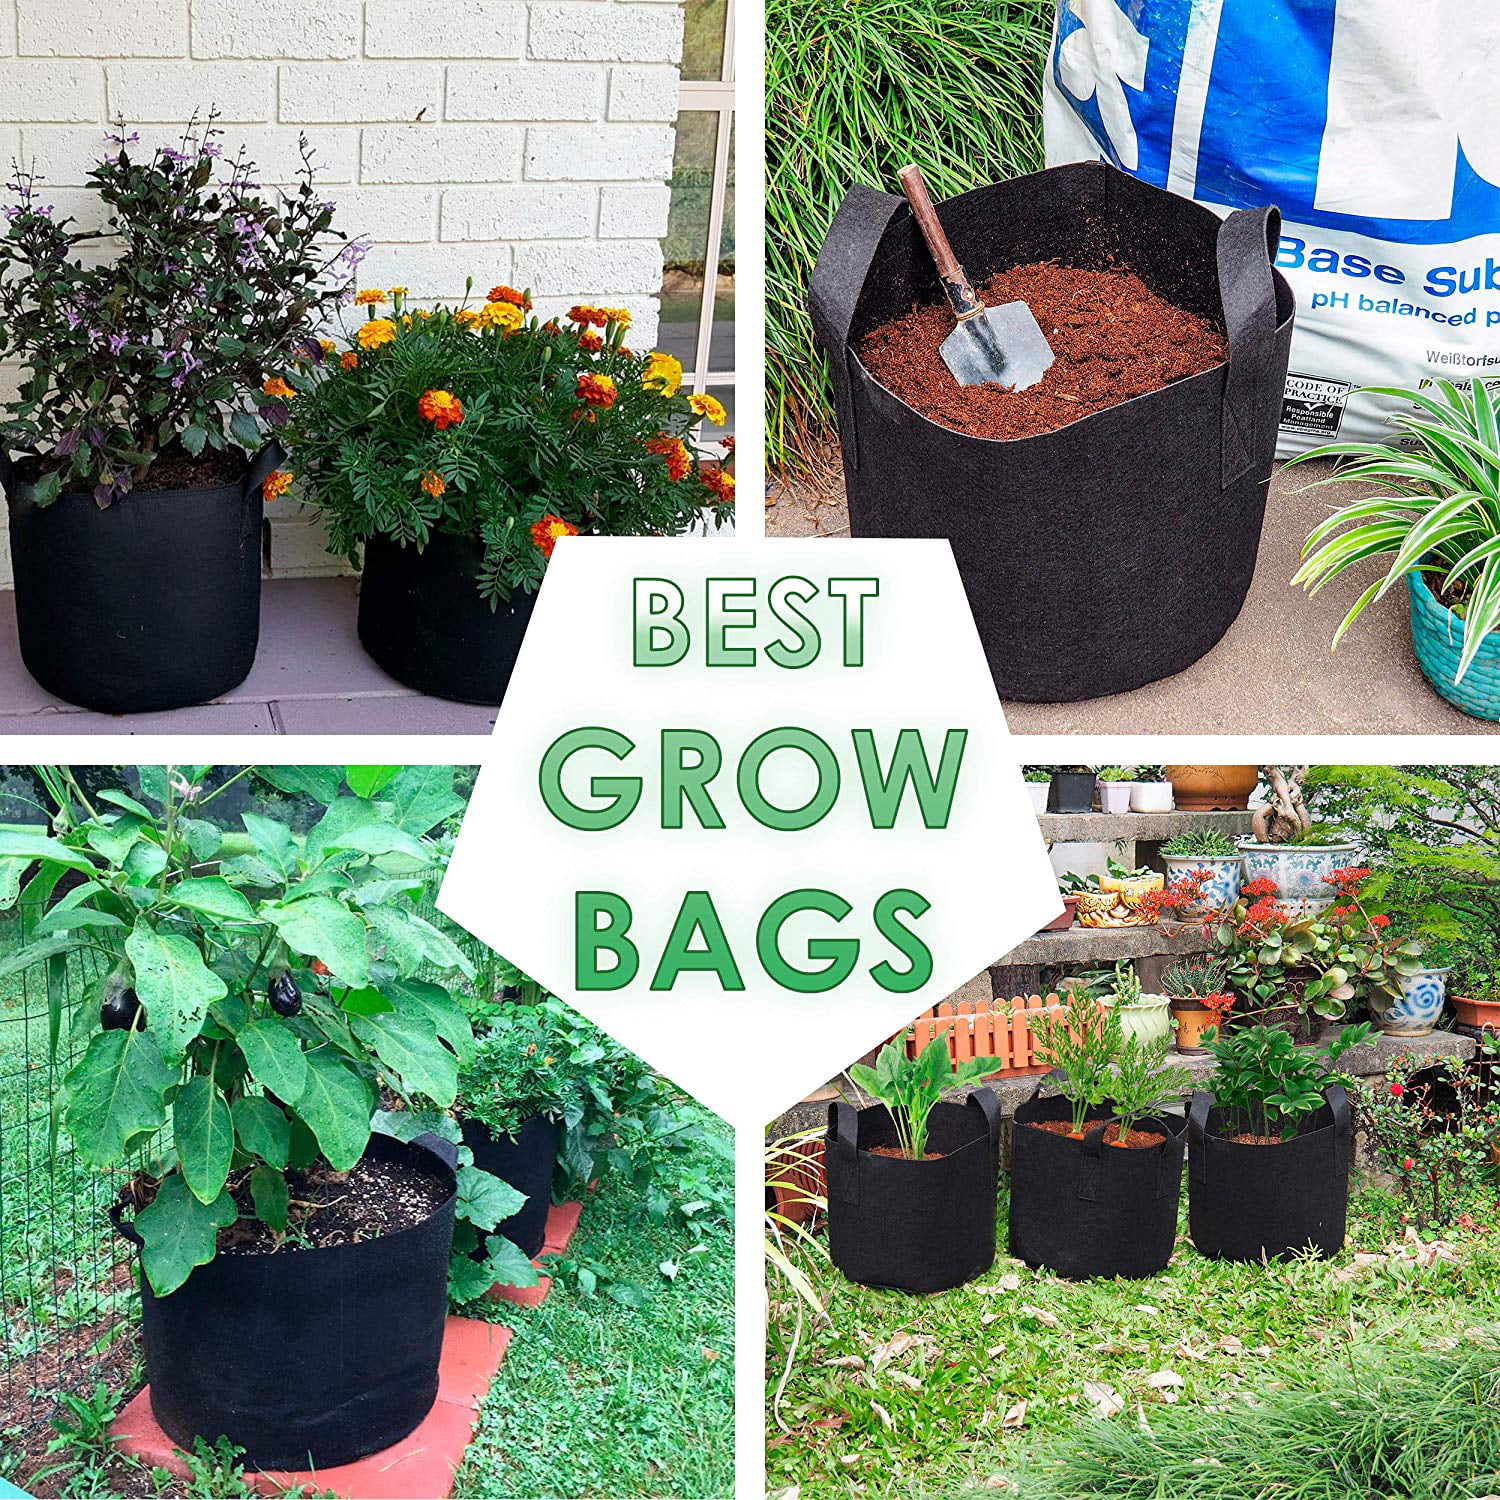 6 Pcs Grow Bags Garden Heavy Duty Non-Woven Aeration Plant Fabric Pot Container 